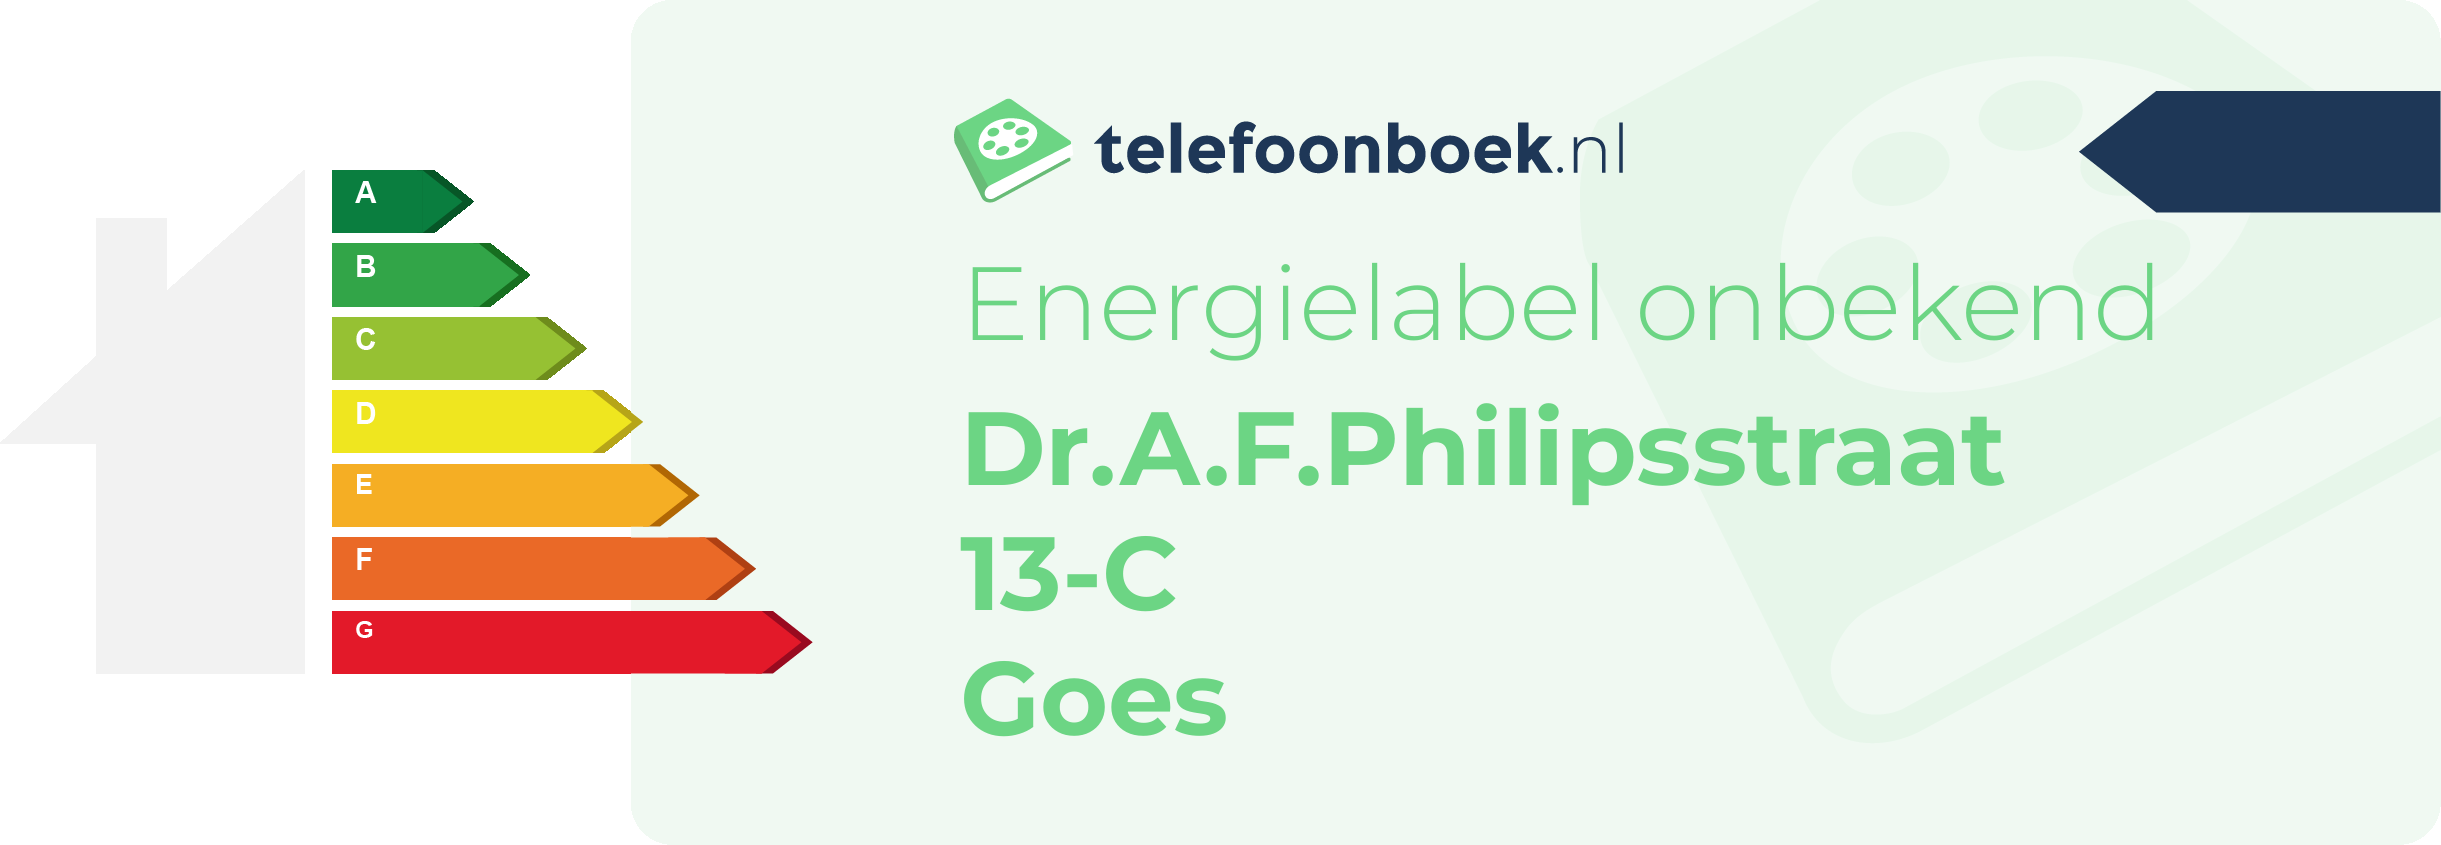 Energielabel Dr.A.F.Philipsstraat 13-C Goes